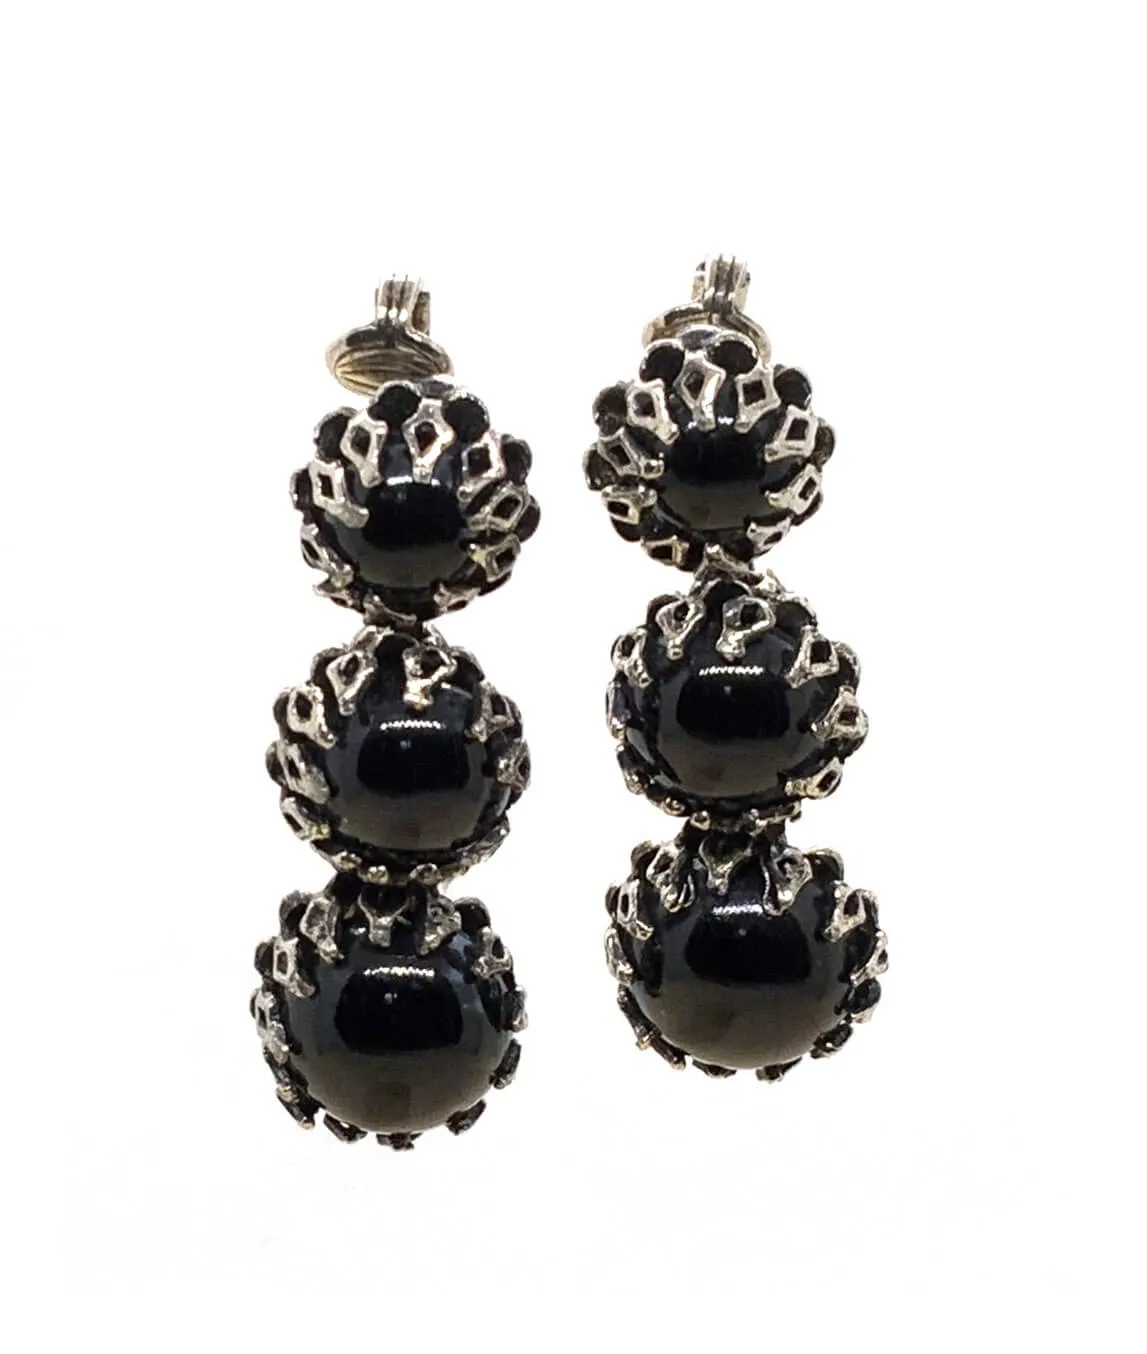 Vintage clip earrings by Dior